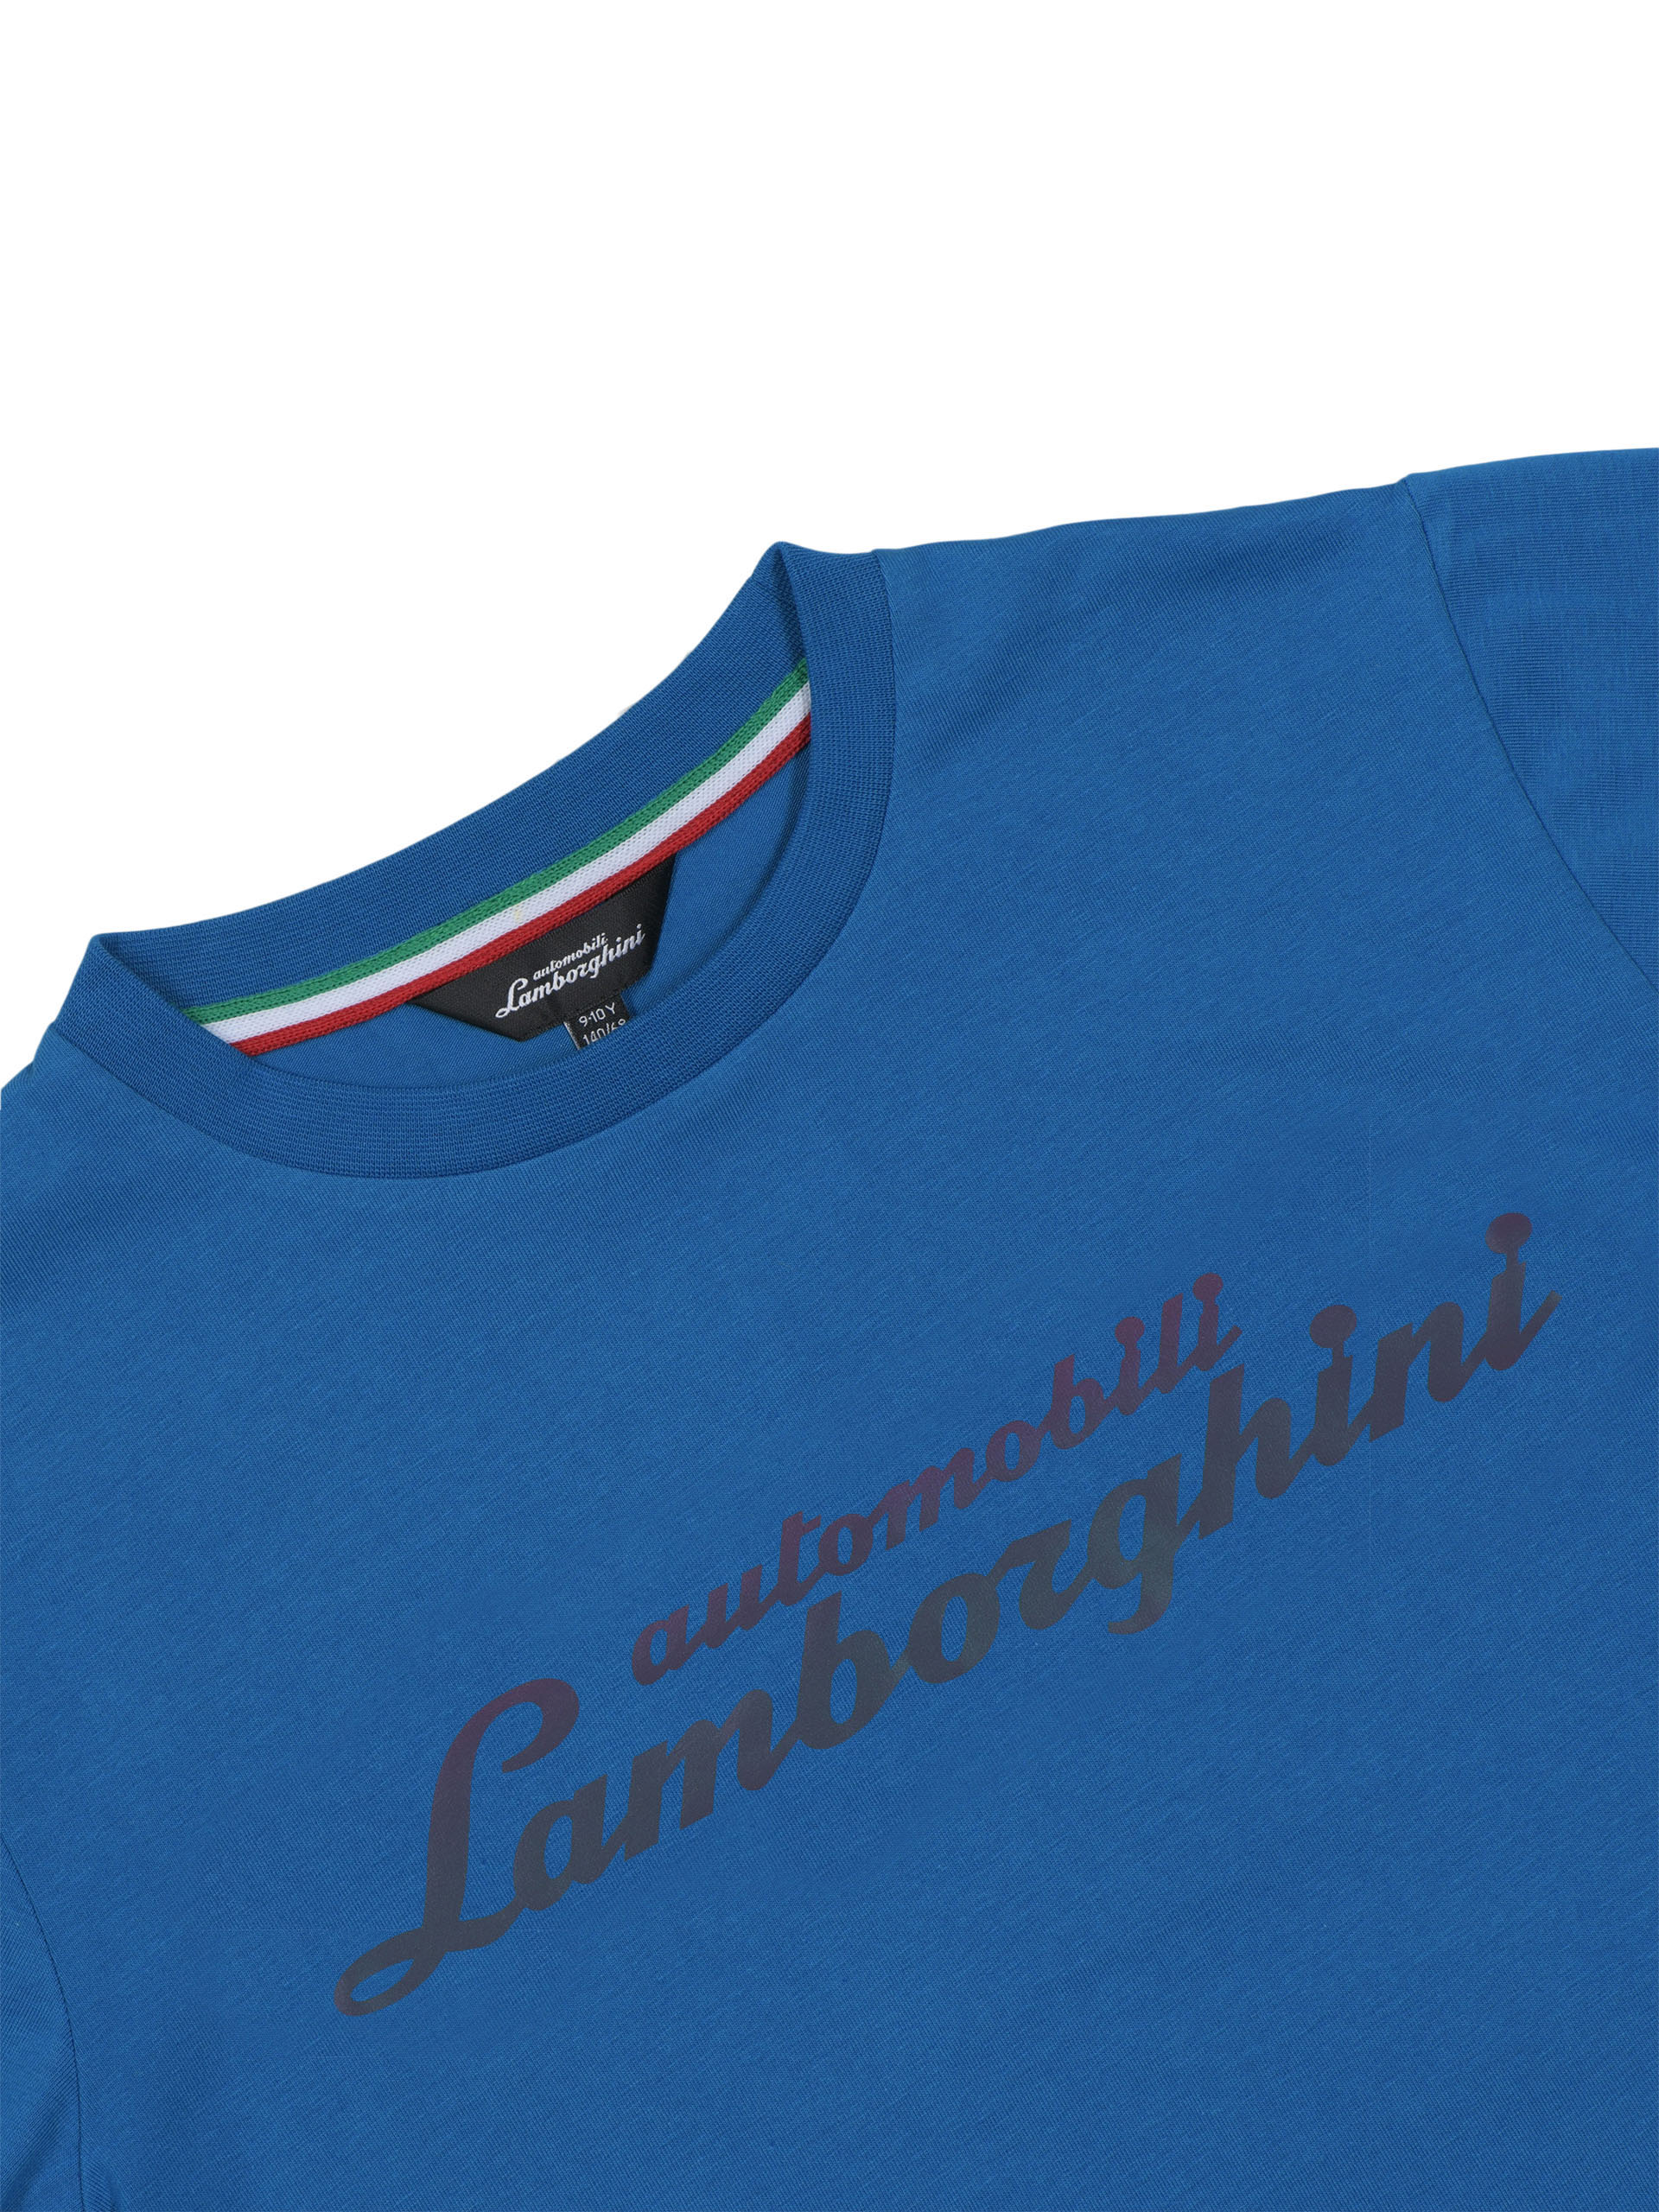 Automobili Lamborghini T-Shirt Rainbow Logoscript blauw